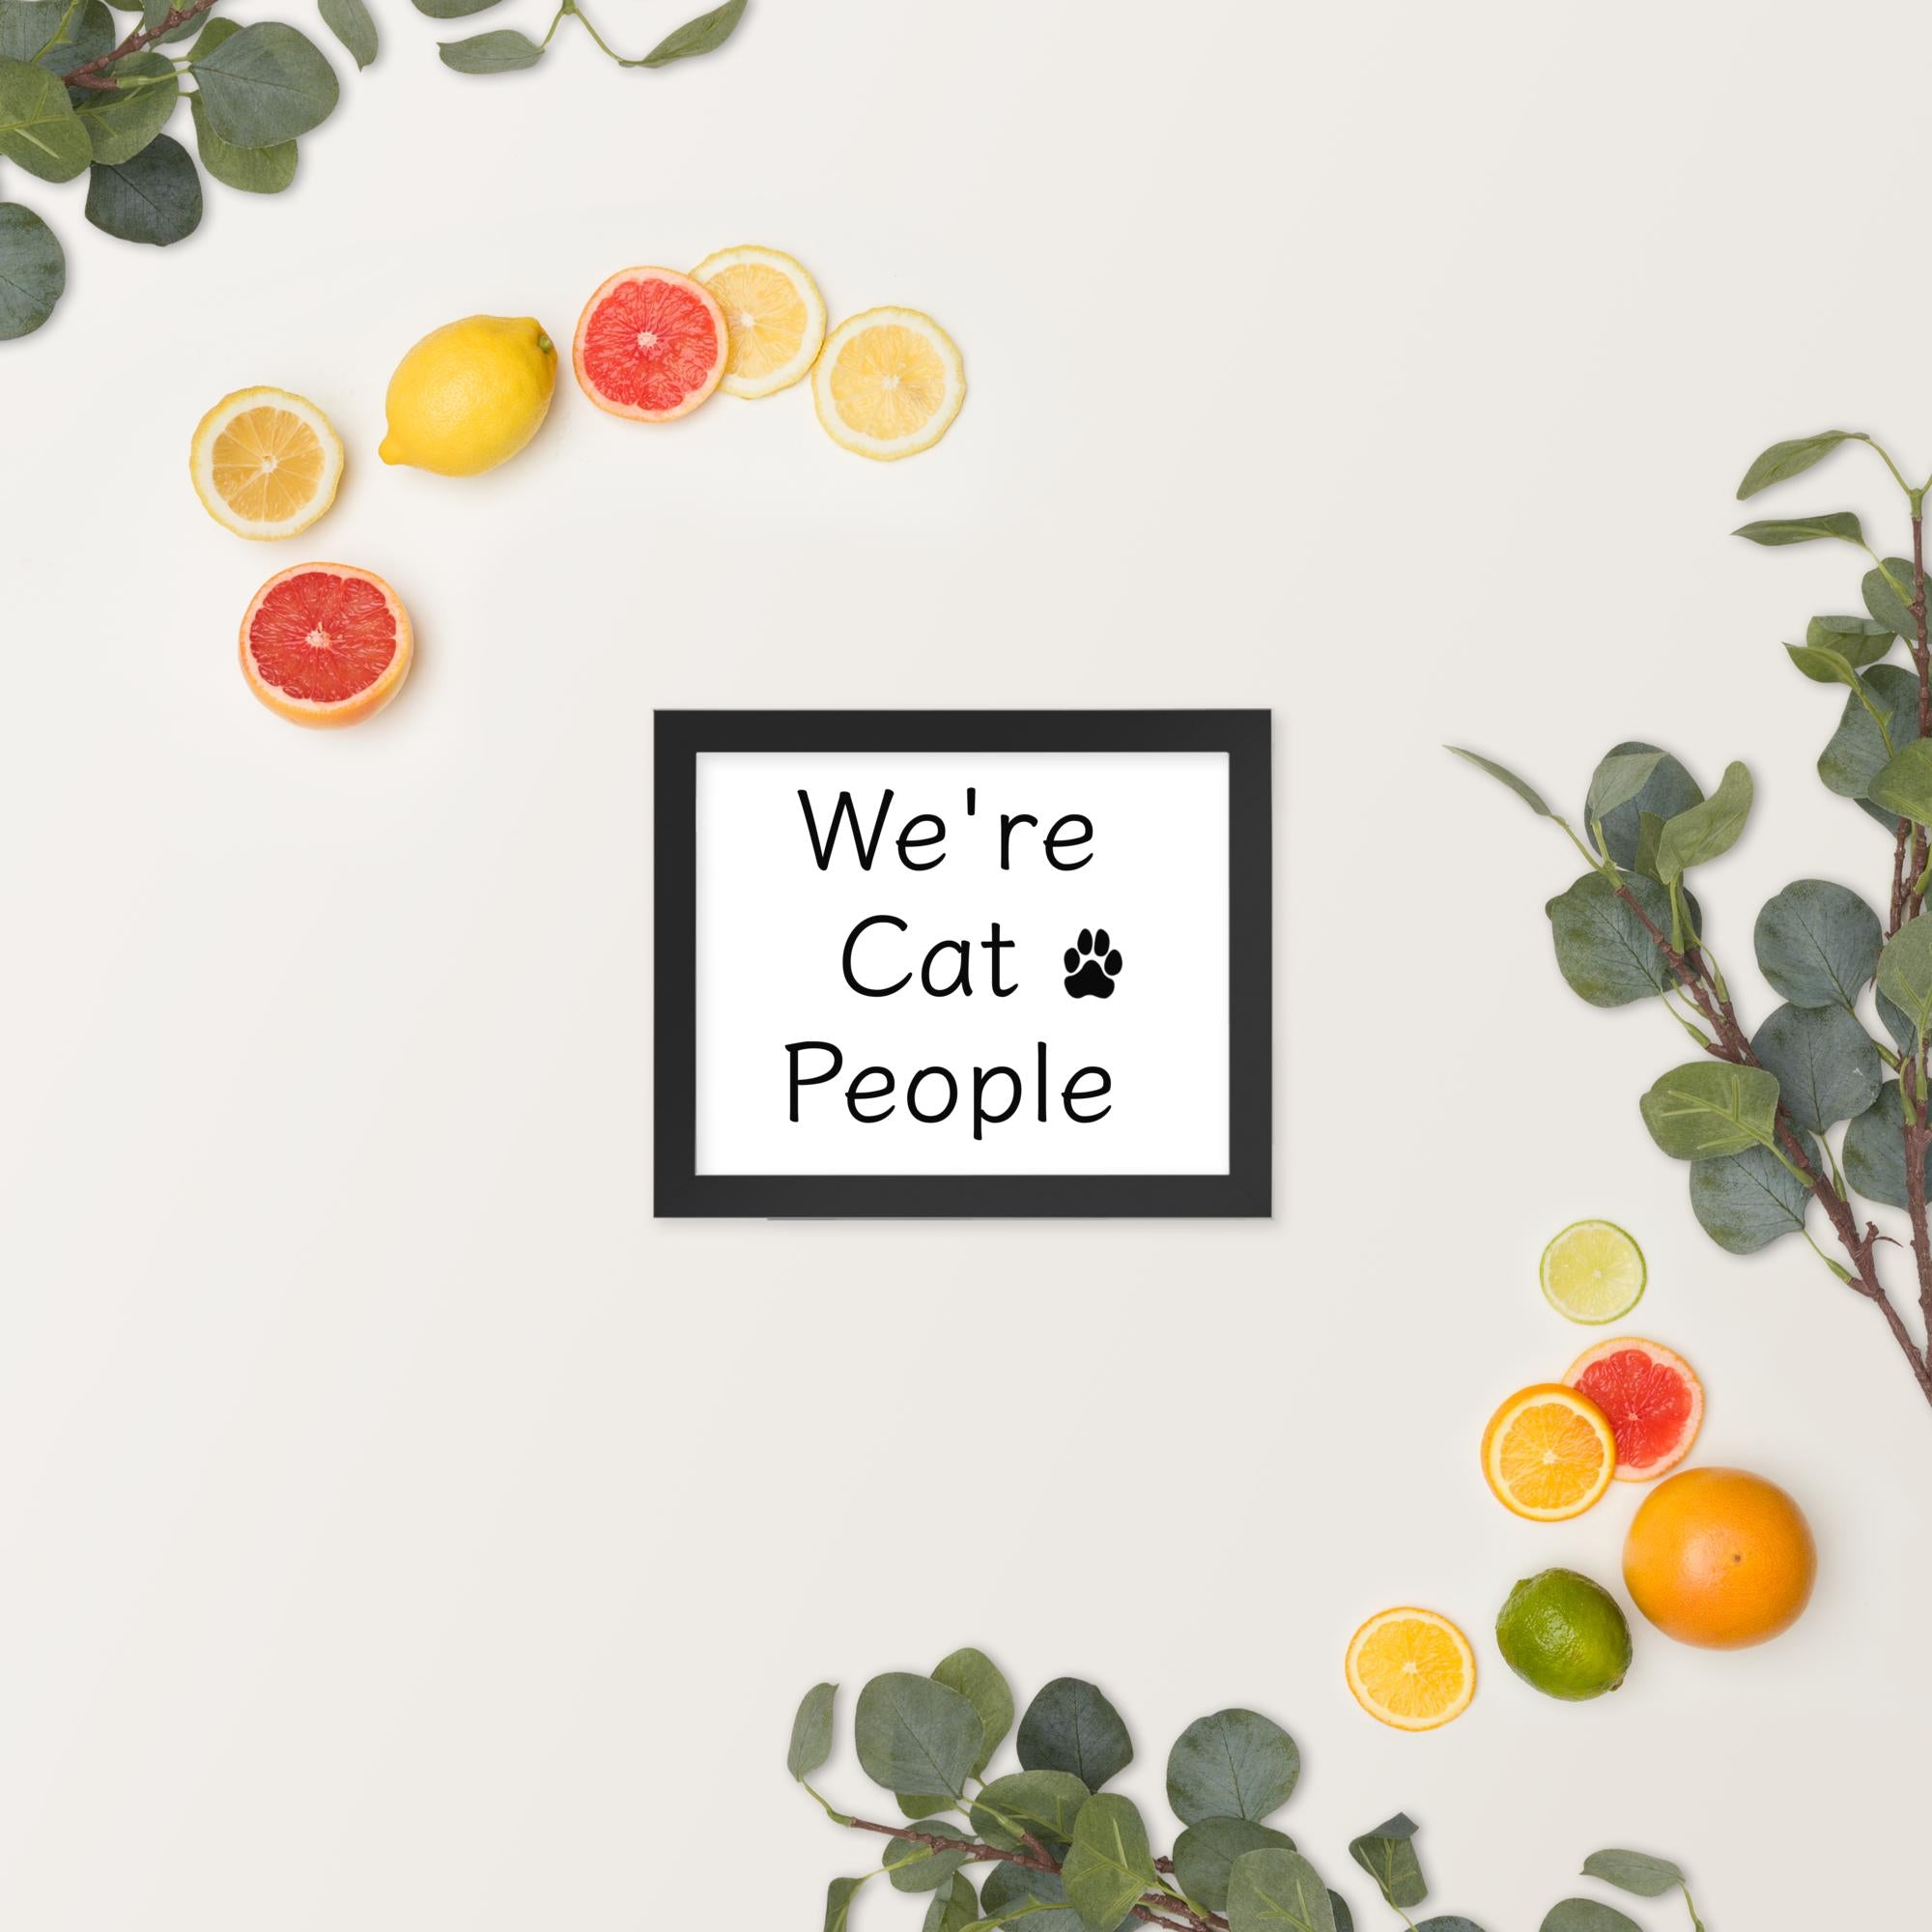 "We're" Cat People Framed poster